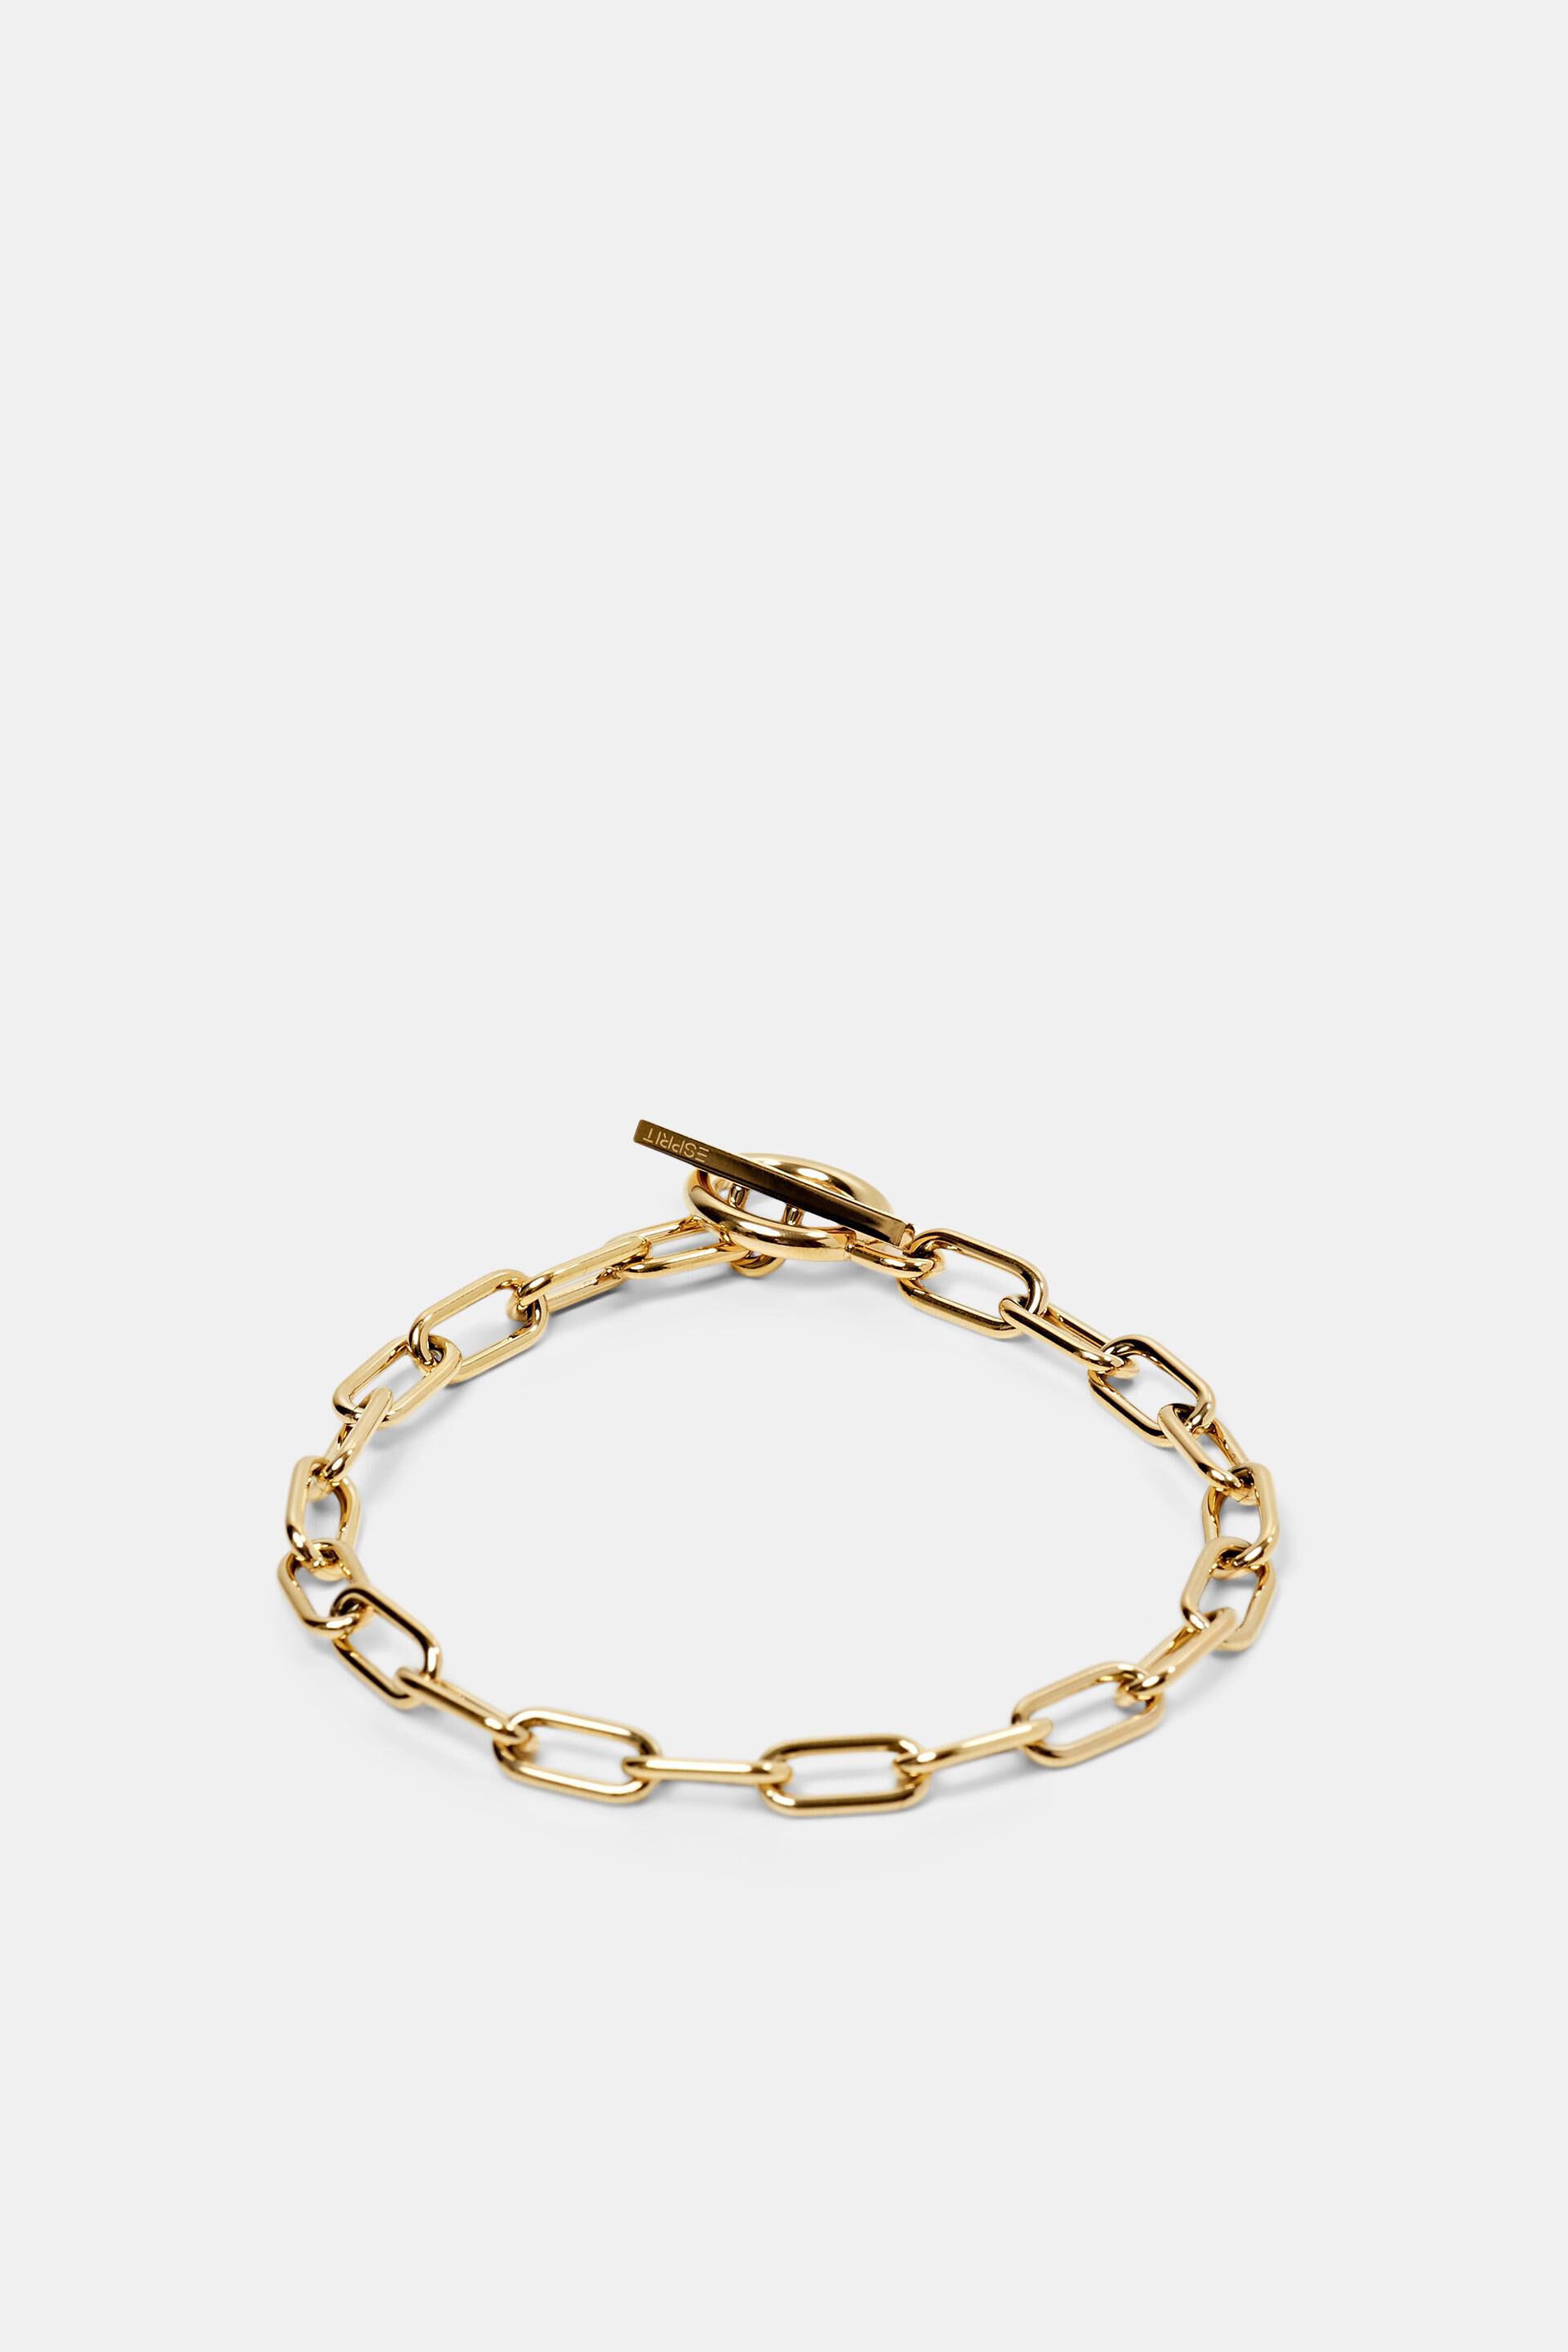 Esprit steel stainless bracelet, Chain